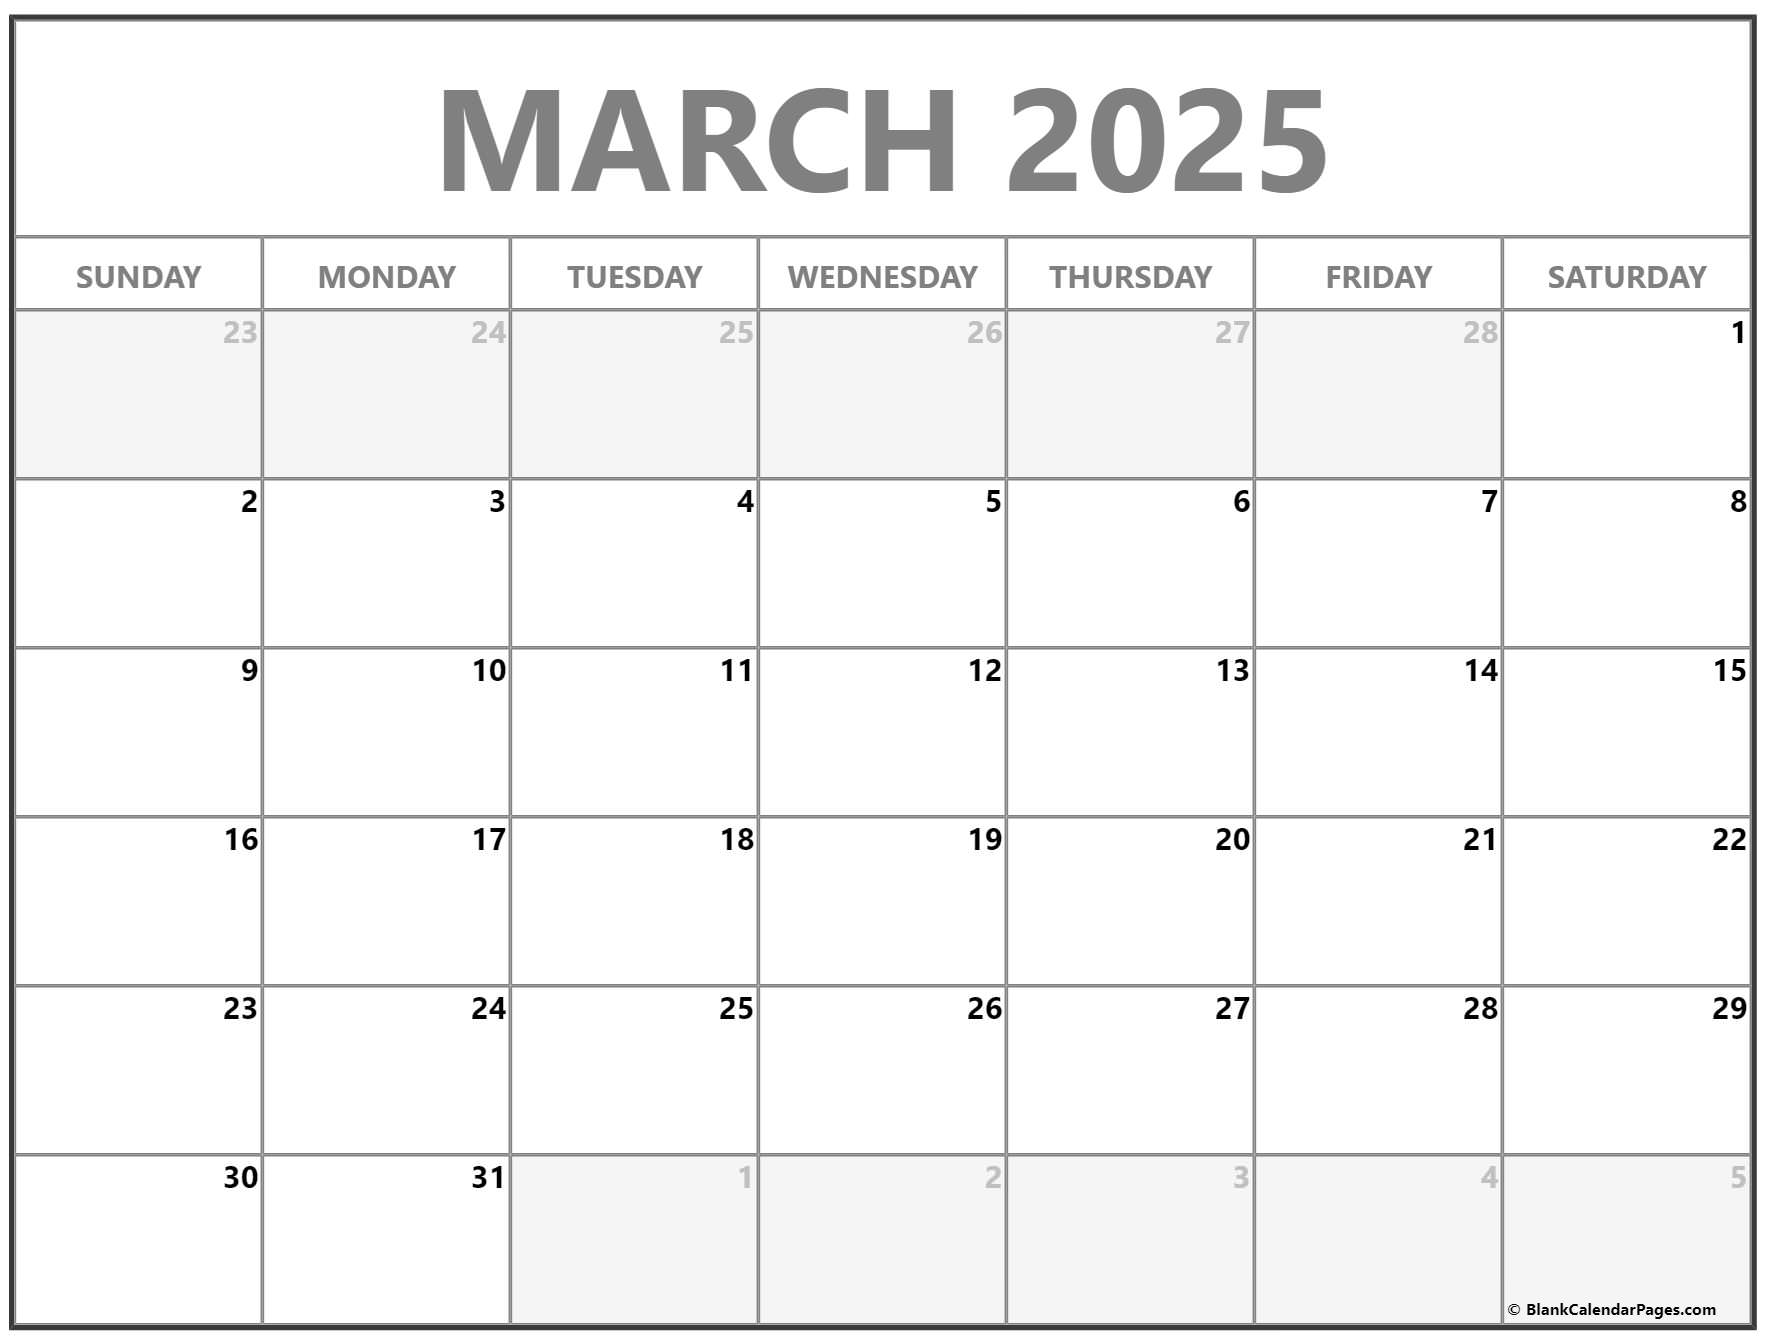 March 2025 calendar | free printable calendar